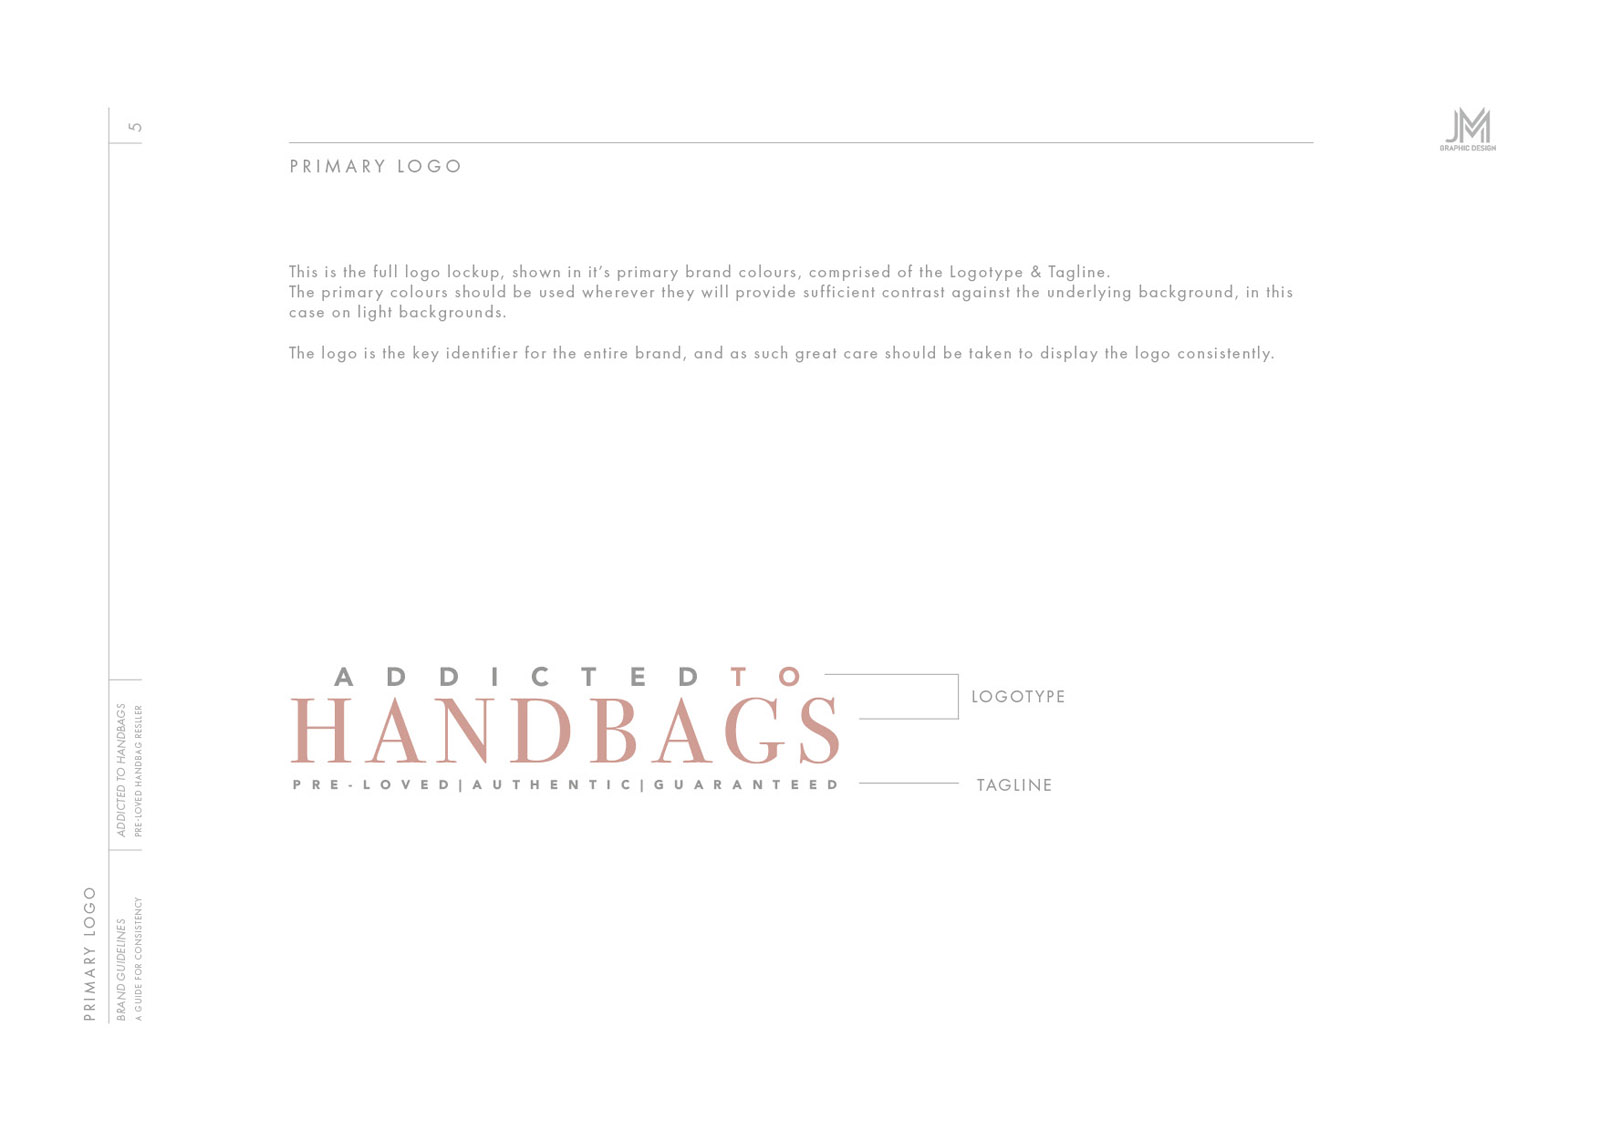 handbag-luxury-brand-identity-logo-design03